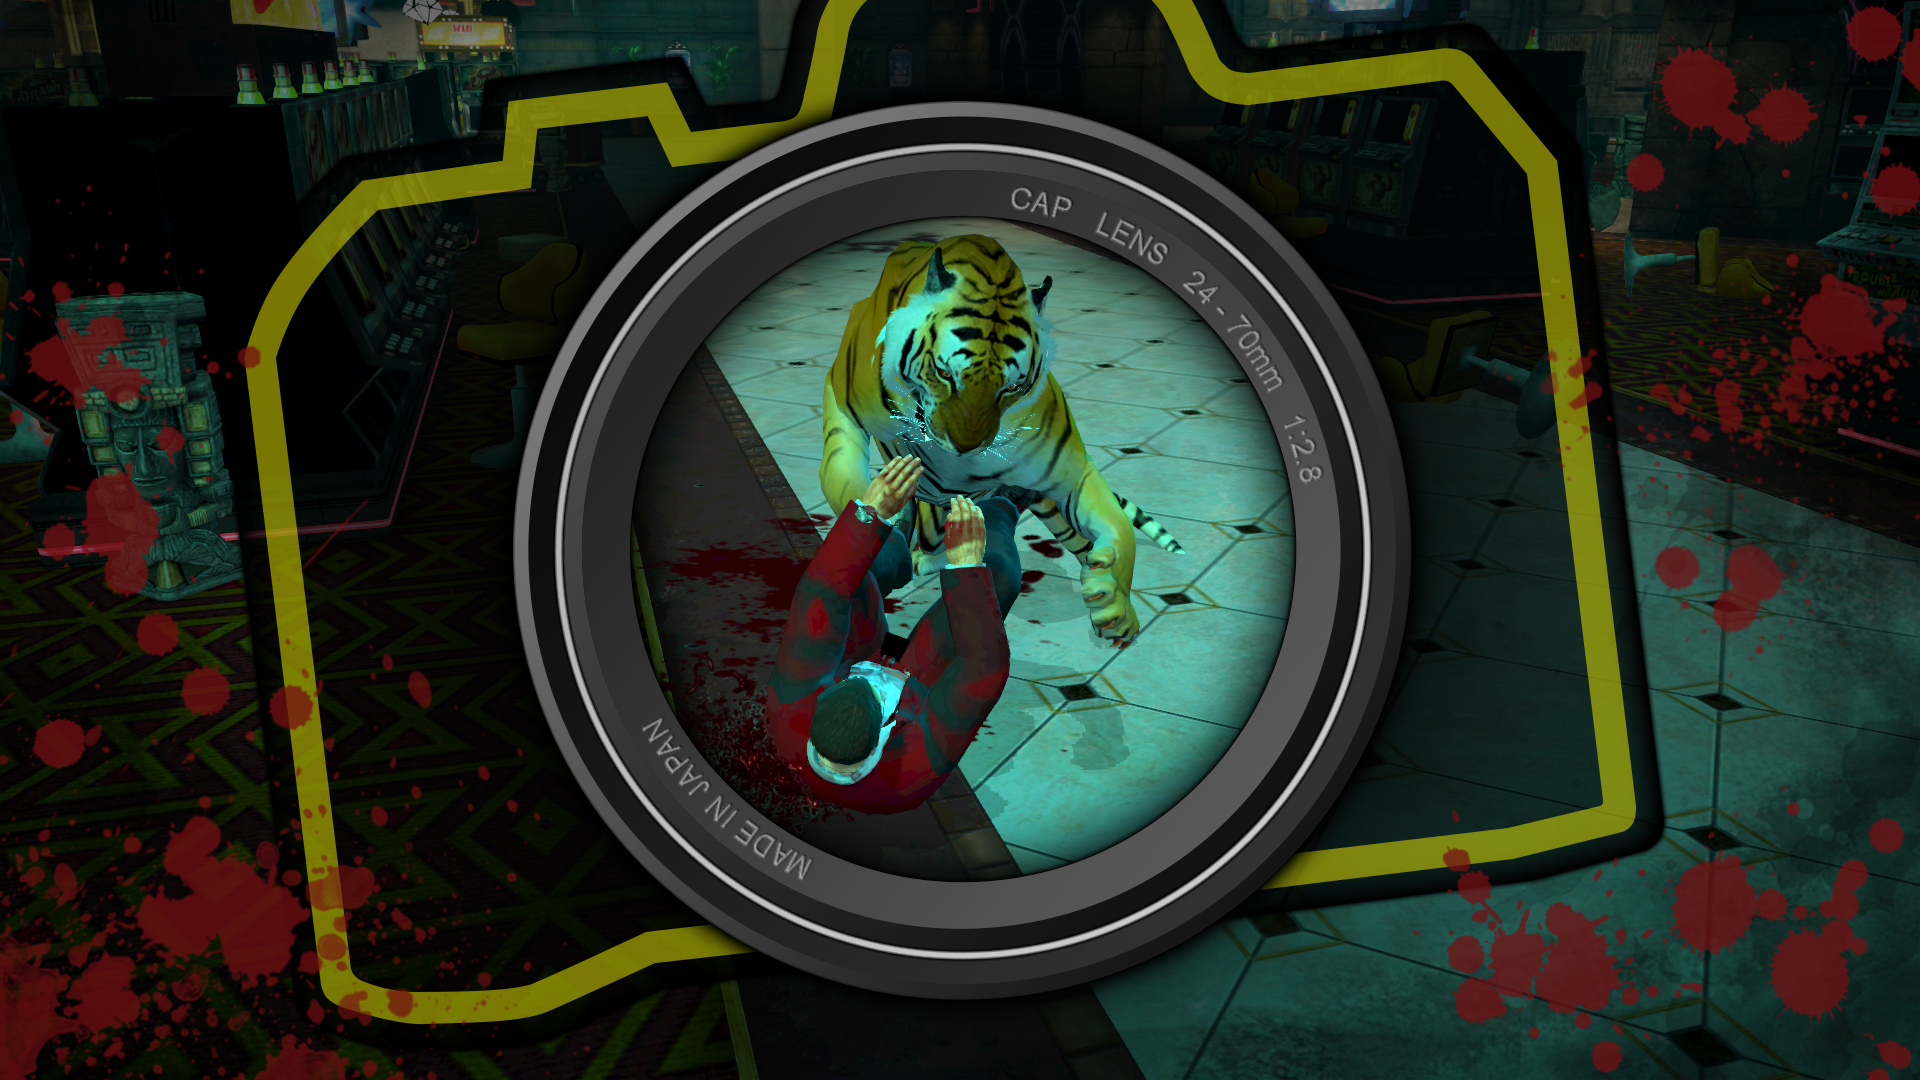 Icon for Tiger Tamer